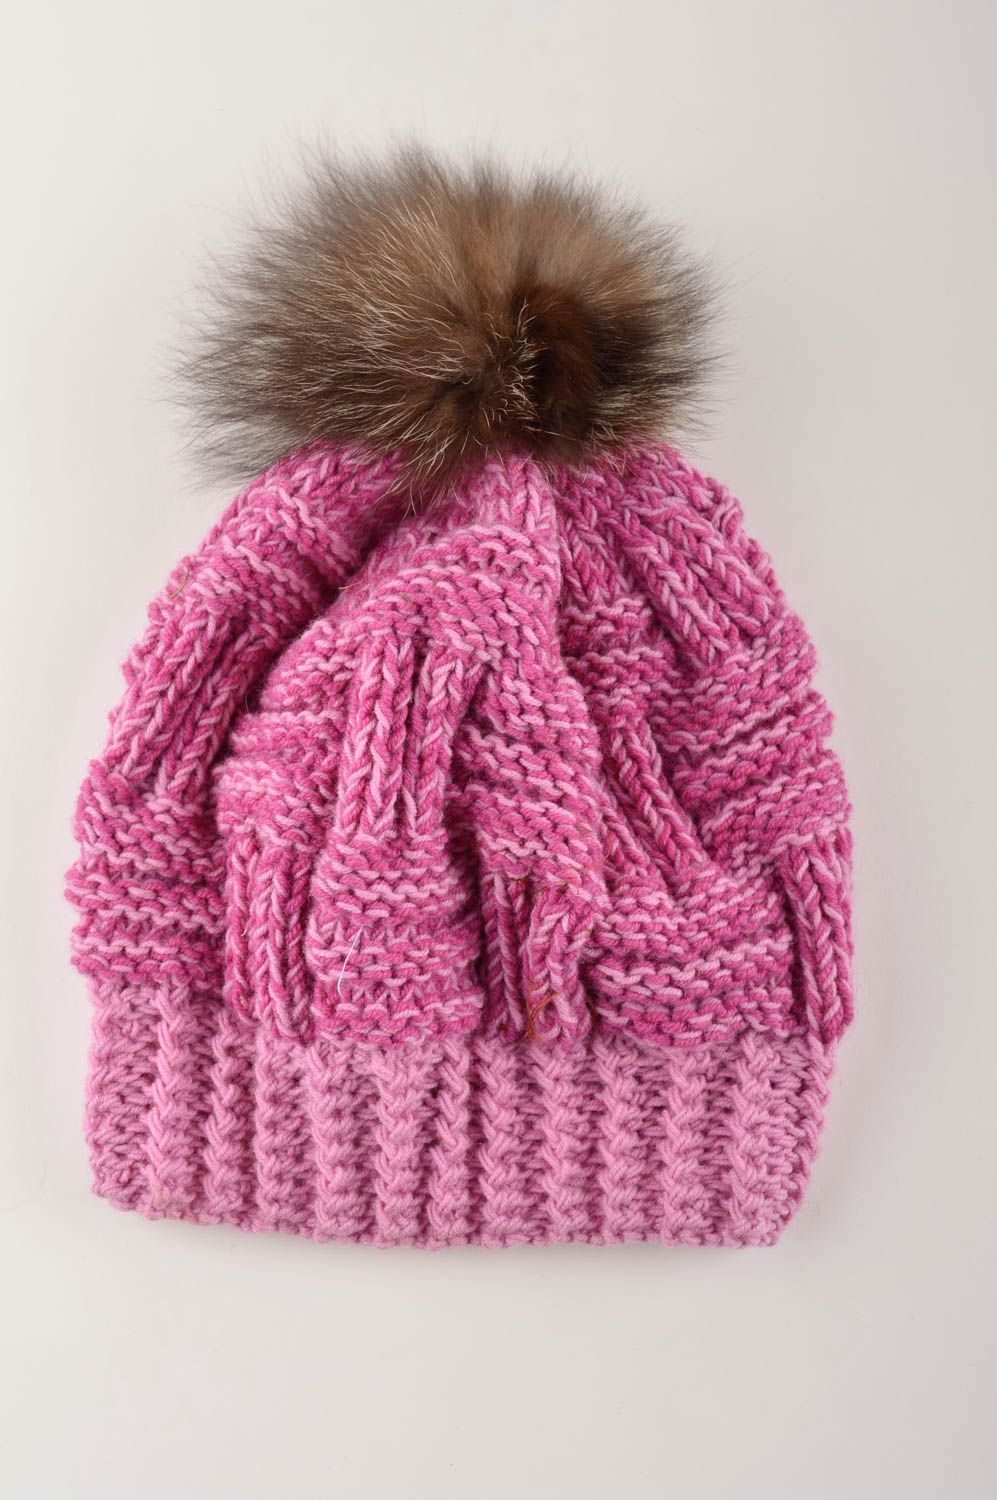 Handmade winter hat unusual hat for girls woolen hat winter hat gift ideas photo 5